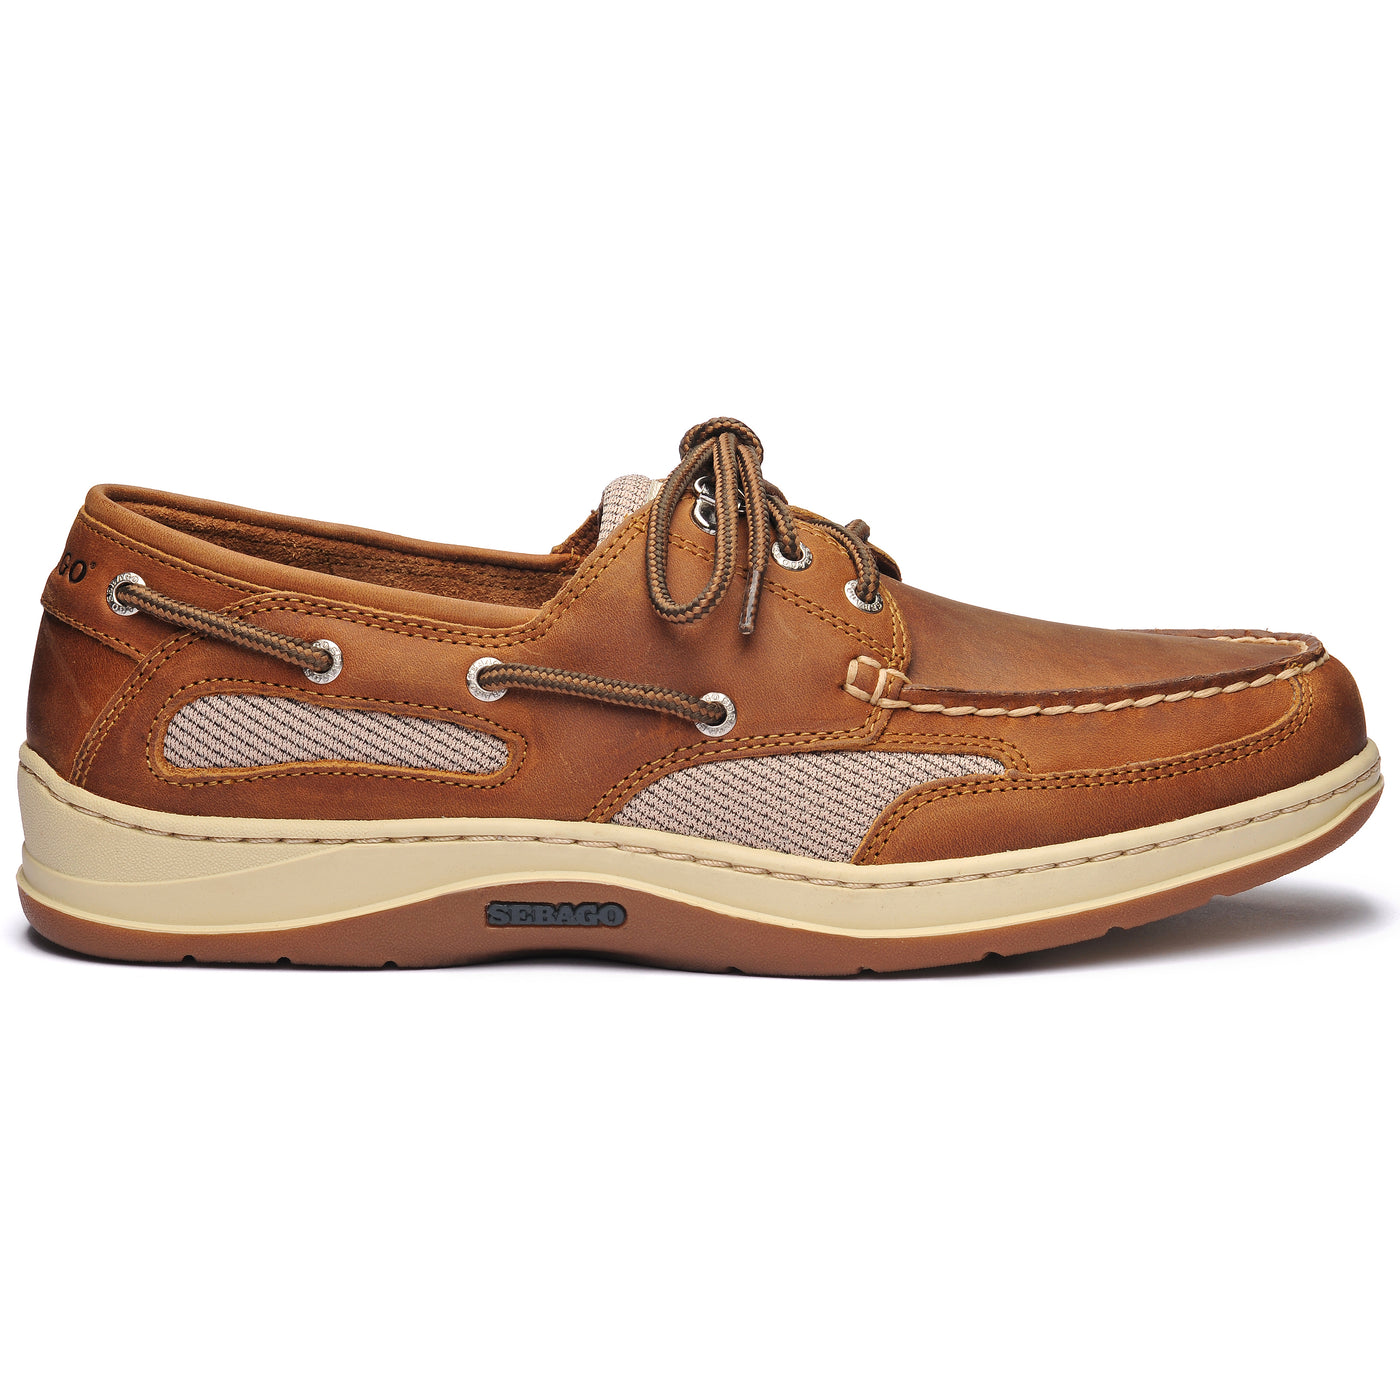 Men's Boat Shoes | Sebago | Marine | Clovehitch II Fgl Waxed | Tan | Side View